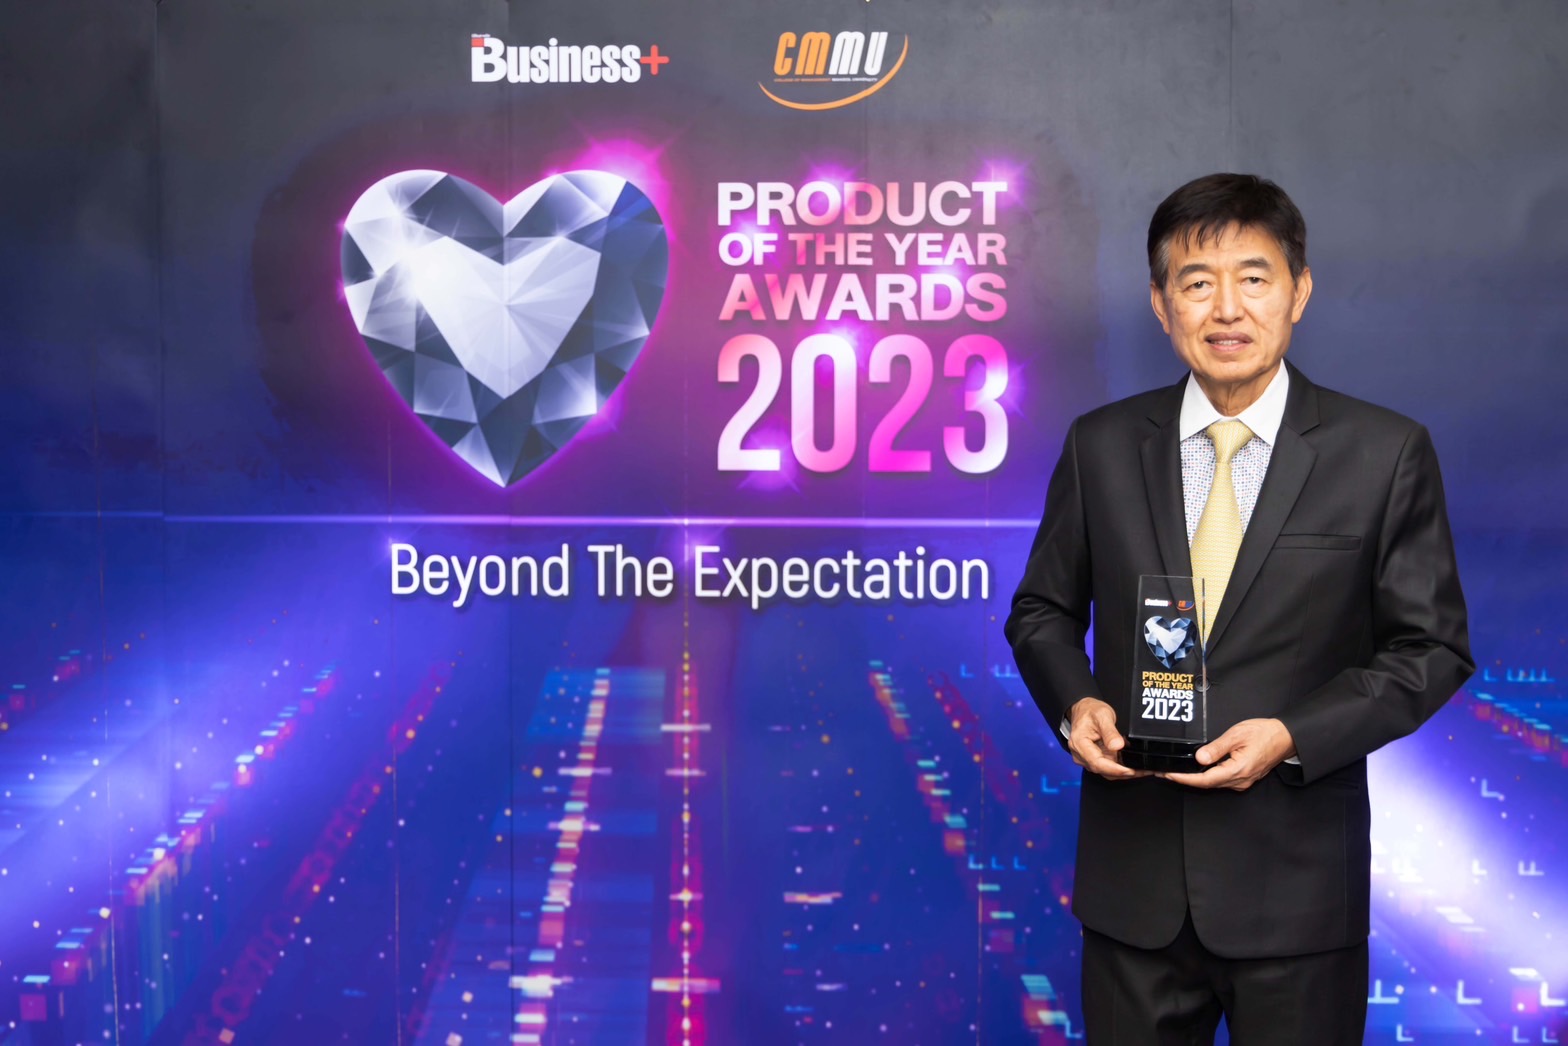 BKI คว้ารางวัลสุดยอดสินค้าและบริการแห่งปี Business+ Product of the Year Awards 2023 ด้านประกันภัยรถยนต์ประเภท 1 ติดต่อกัน 4 ปีซ้อน